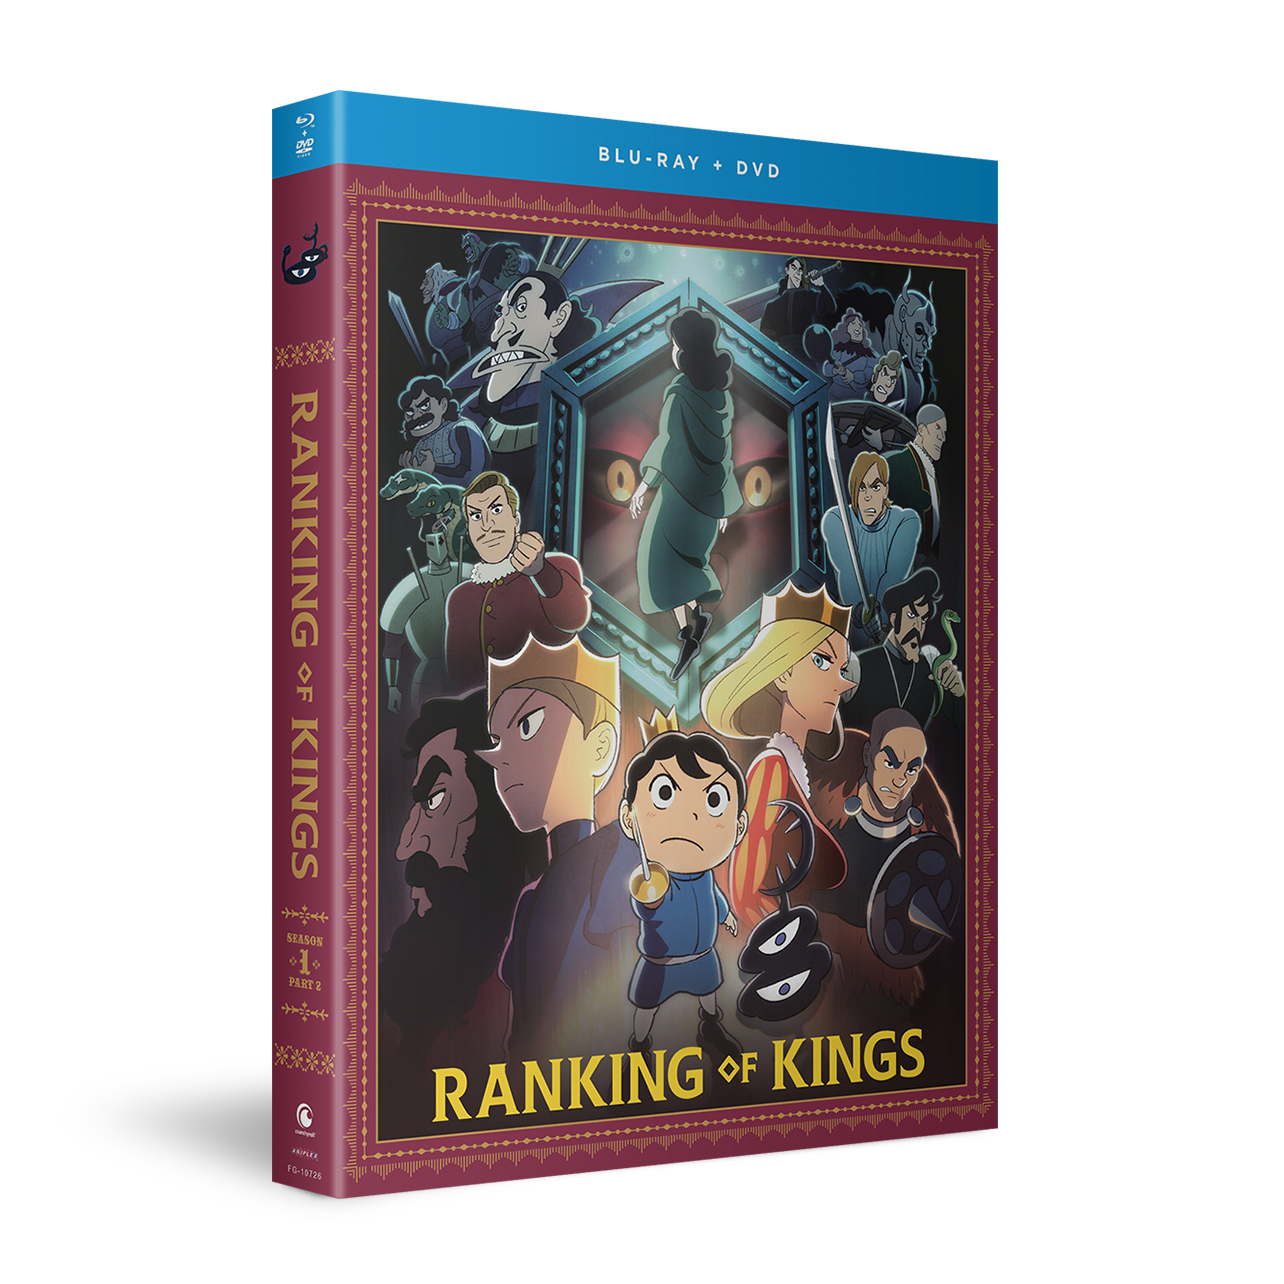 Ranking of Kings - Season 1 Part 2 - Blu-ray + DVD image count 2